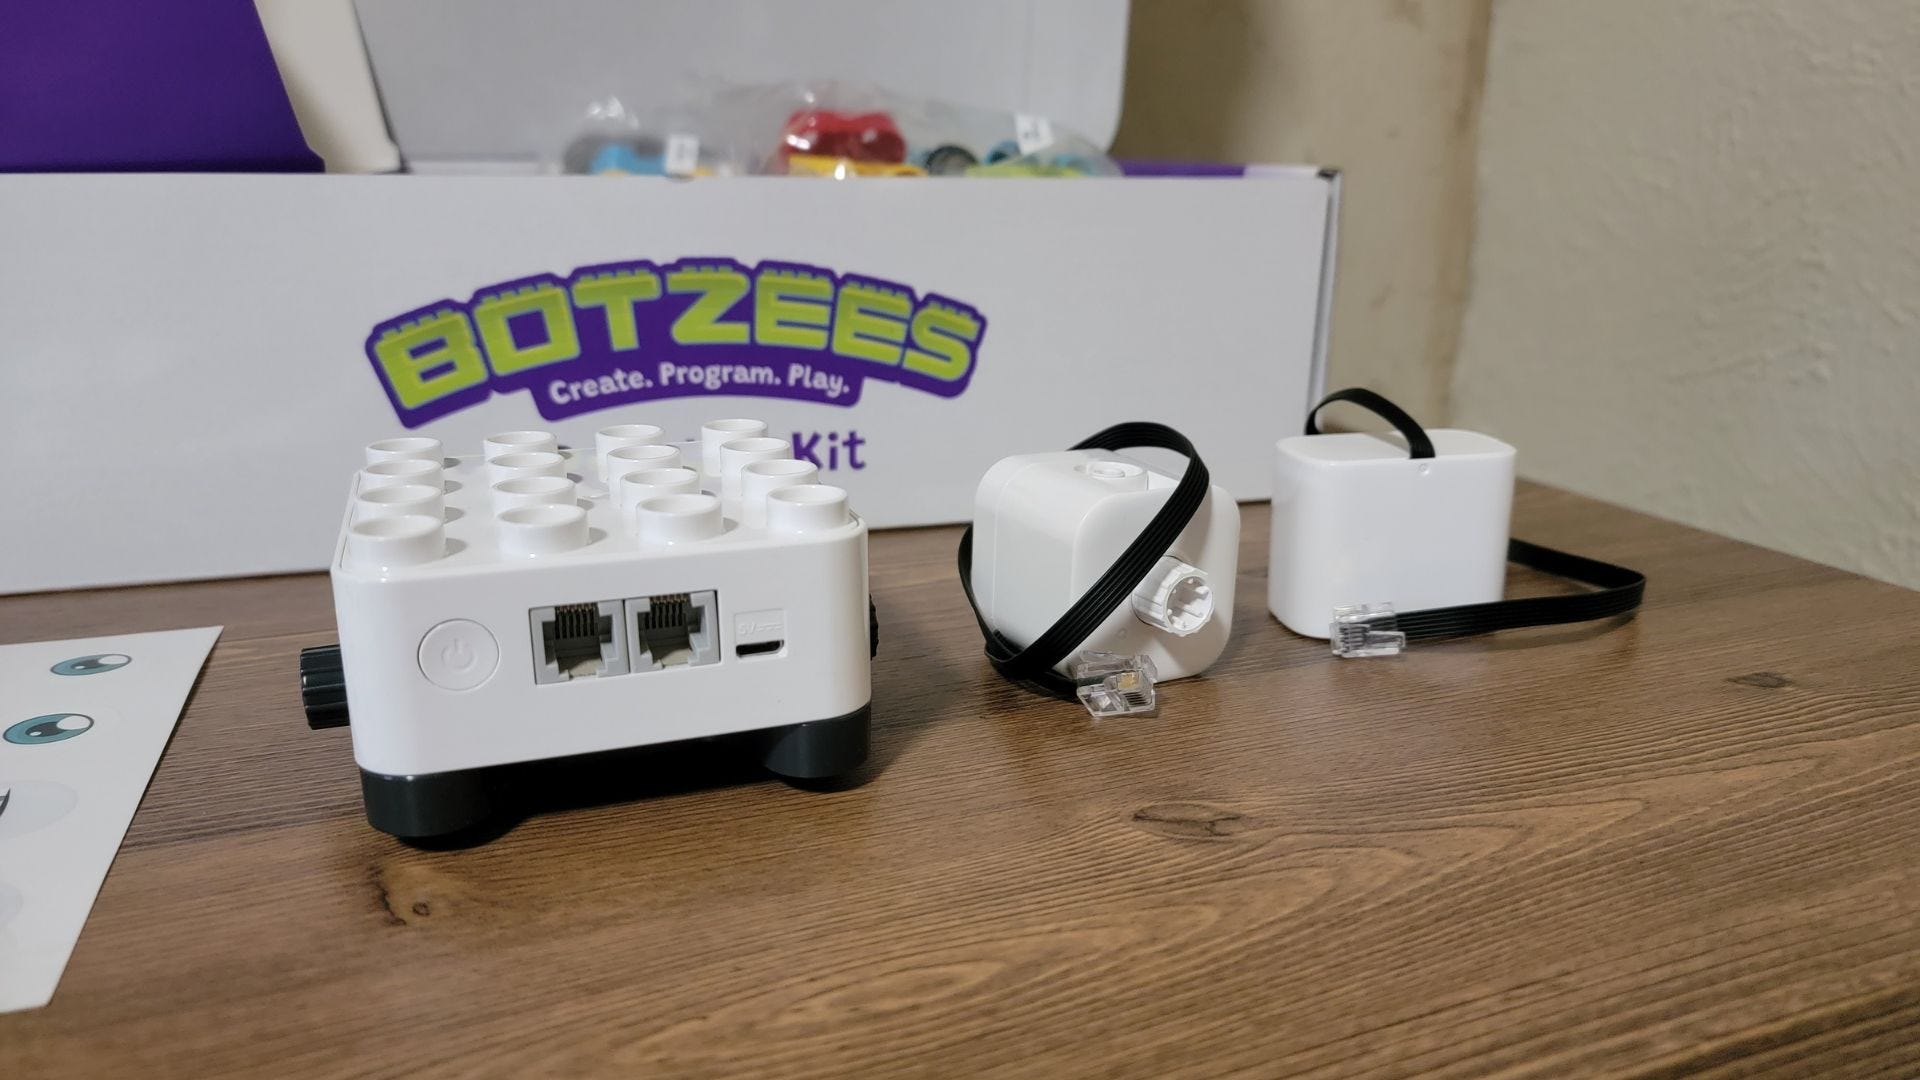 Botzees robotics kit electronics parts